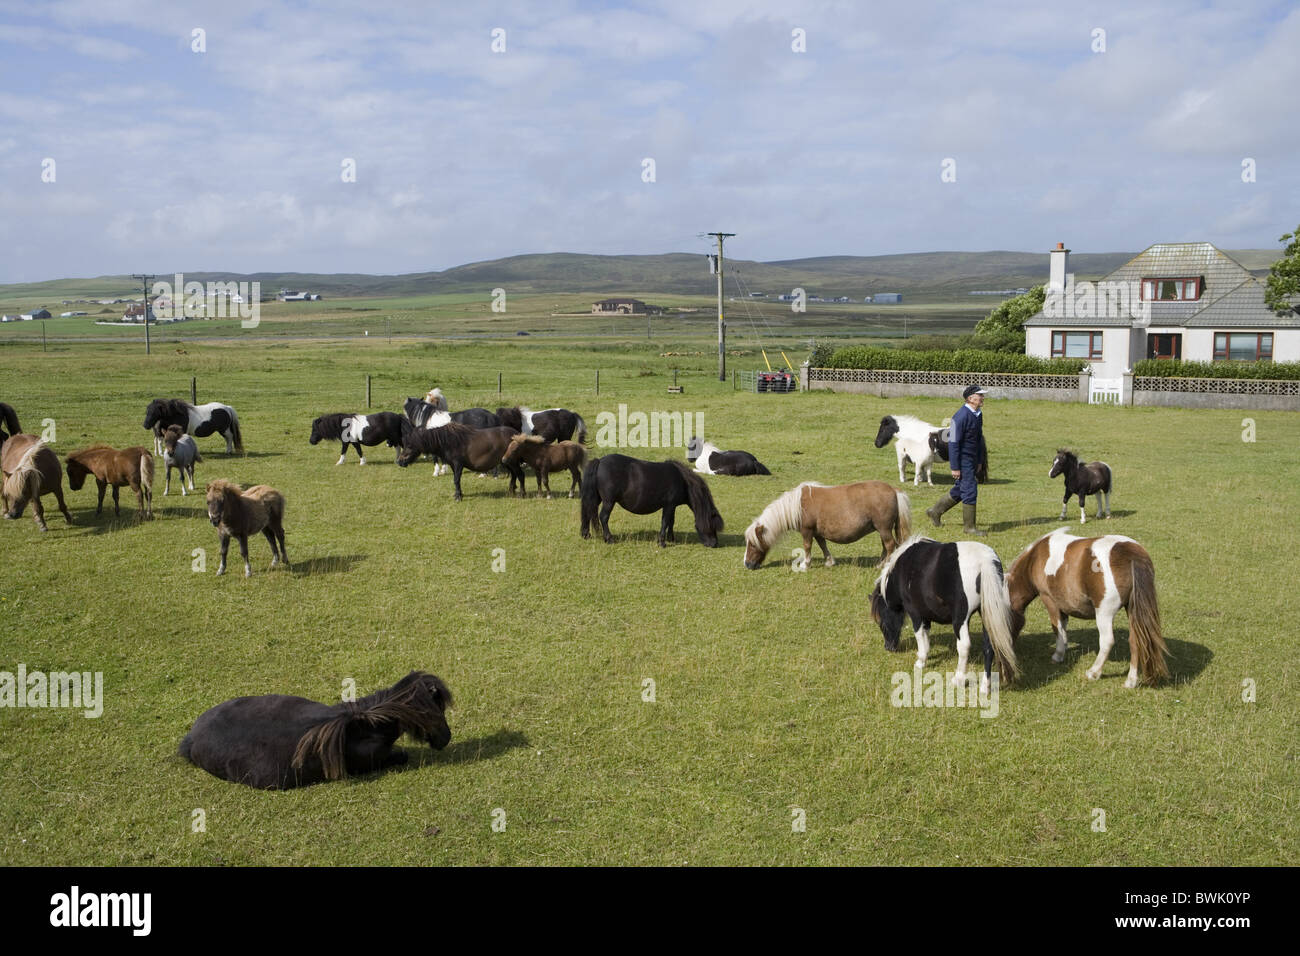 Shetland Ponies on a pasture at Gott Farm, Weisdale, Mainland, Shetland Islands, Scotland, Great Britain, Europe Stock Photo